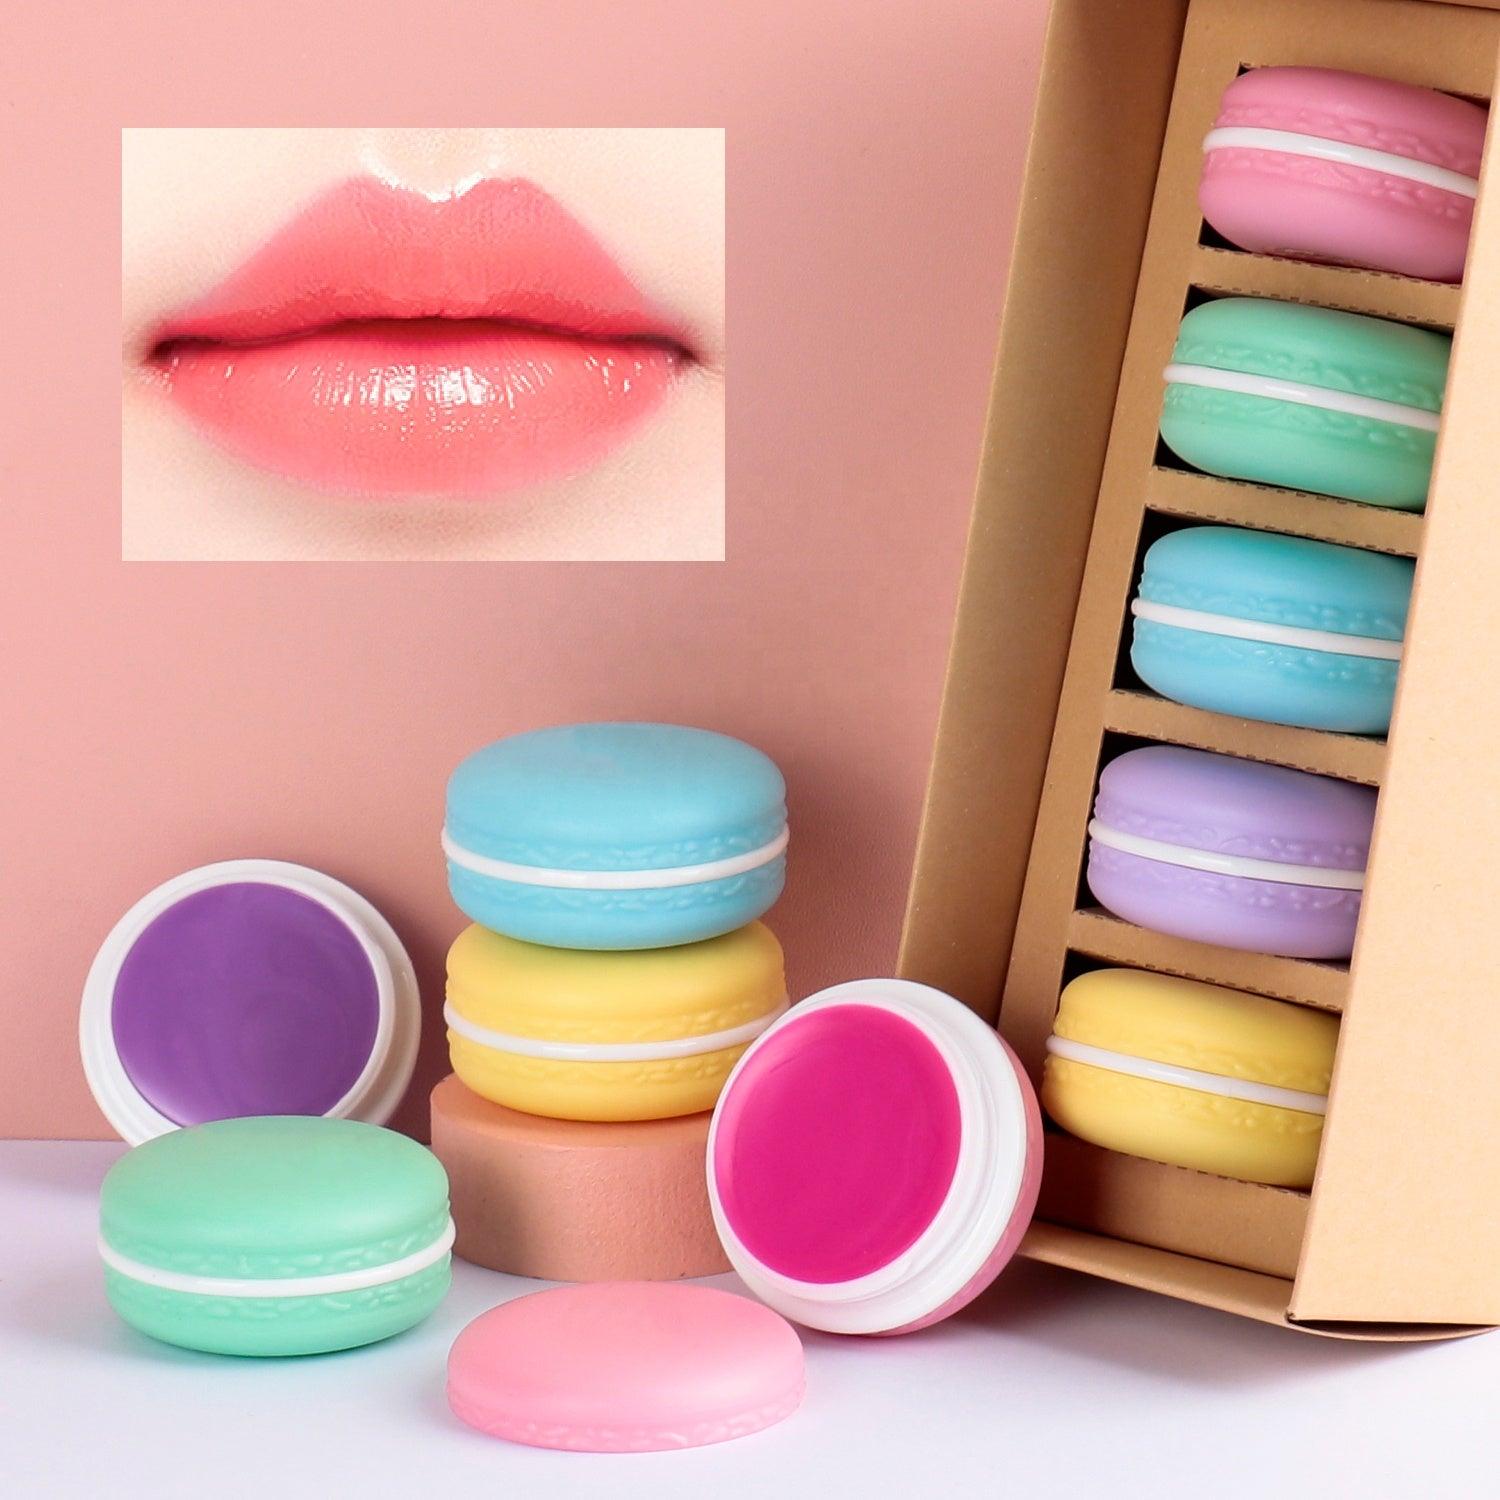 Macaron Lip Care Balm Private Label Fruit Flavor Moisturizing Lip Balm Lip Chapstick - Shmily Beauty